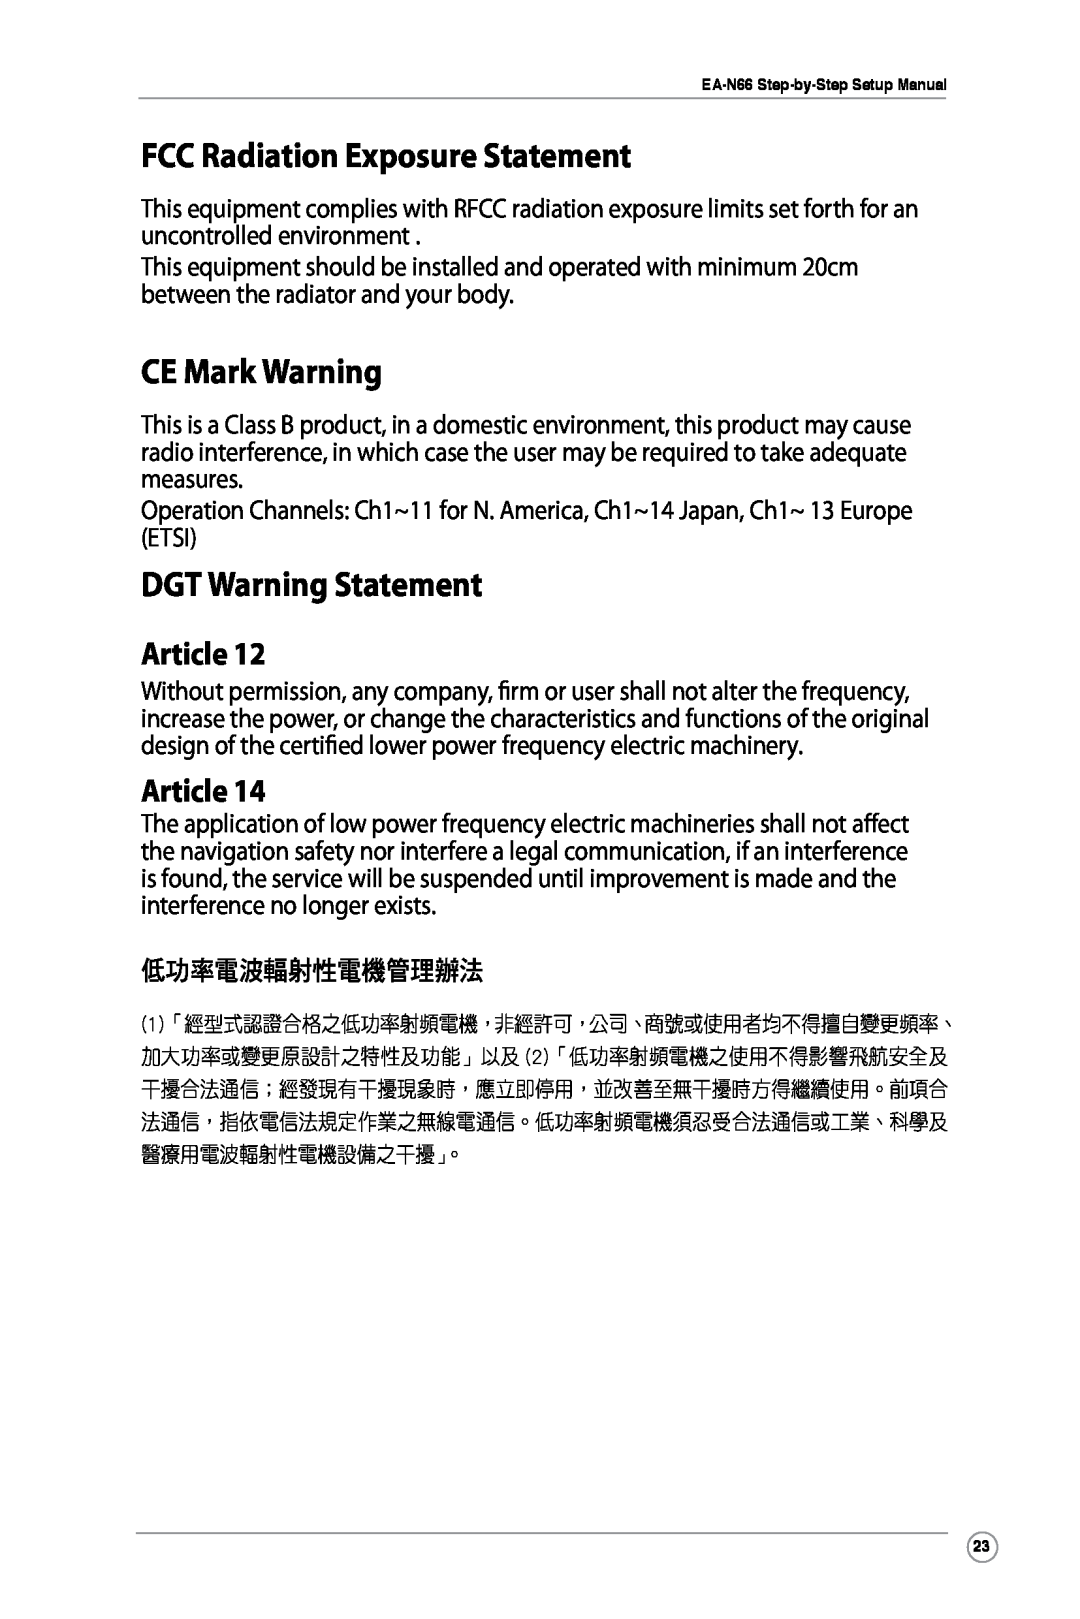 Asus EA-N66 manual FCC Radiation Exposure Statement, CE Mark Warning, DGT Warning Statement, Article 